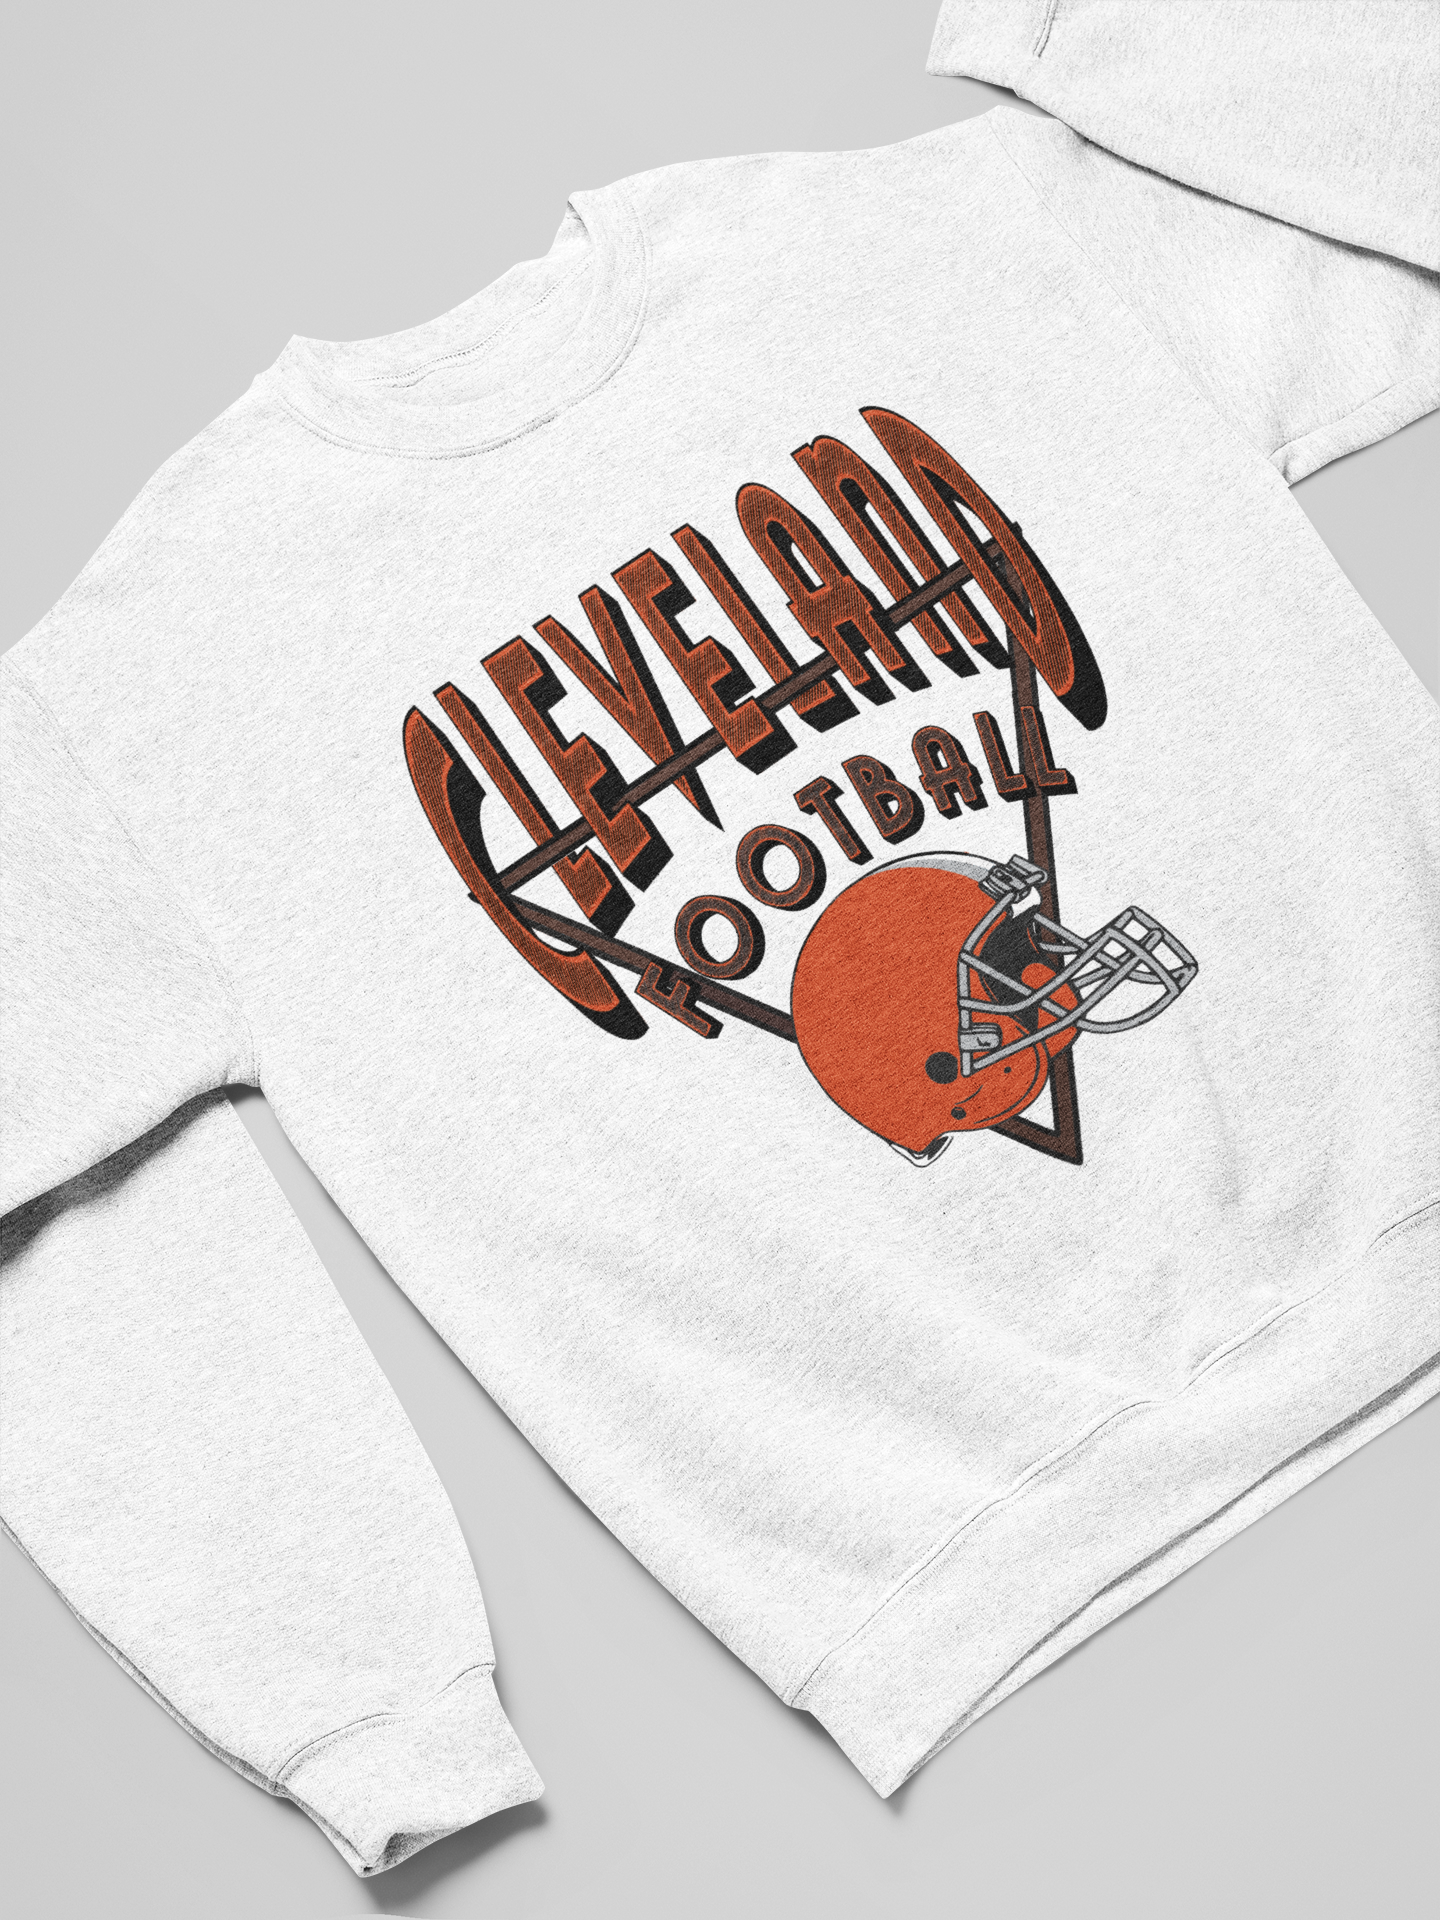 Cleveland Browns Sweatshirt - Vintage NFL Football Cleveland Browns Crewneck Sweatshirt - NFL Football Sweatshirt